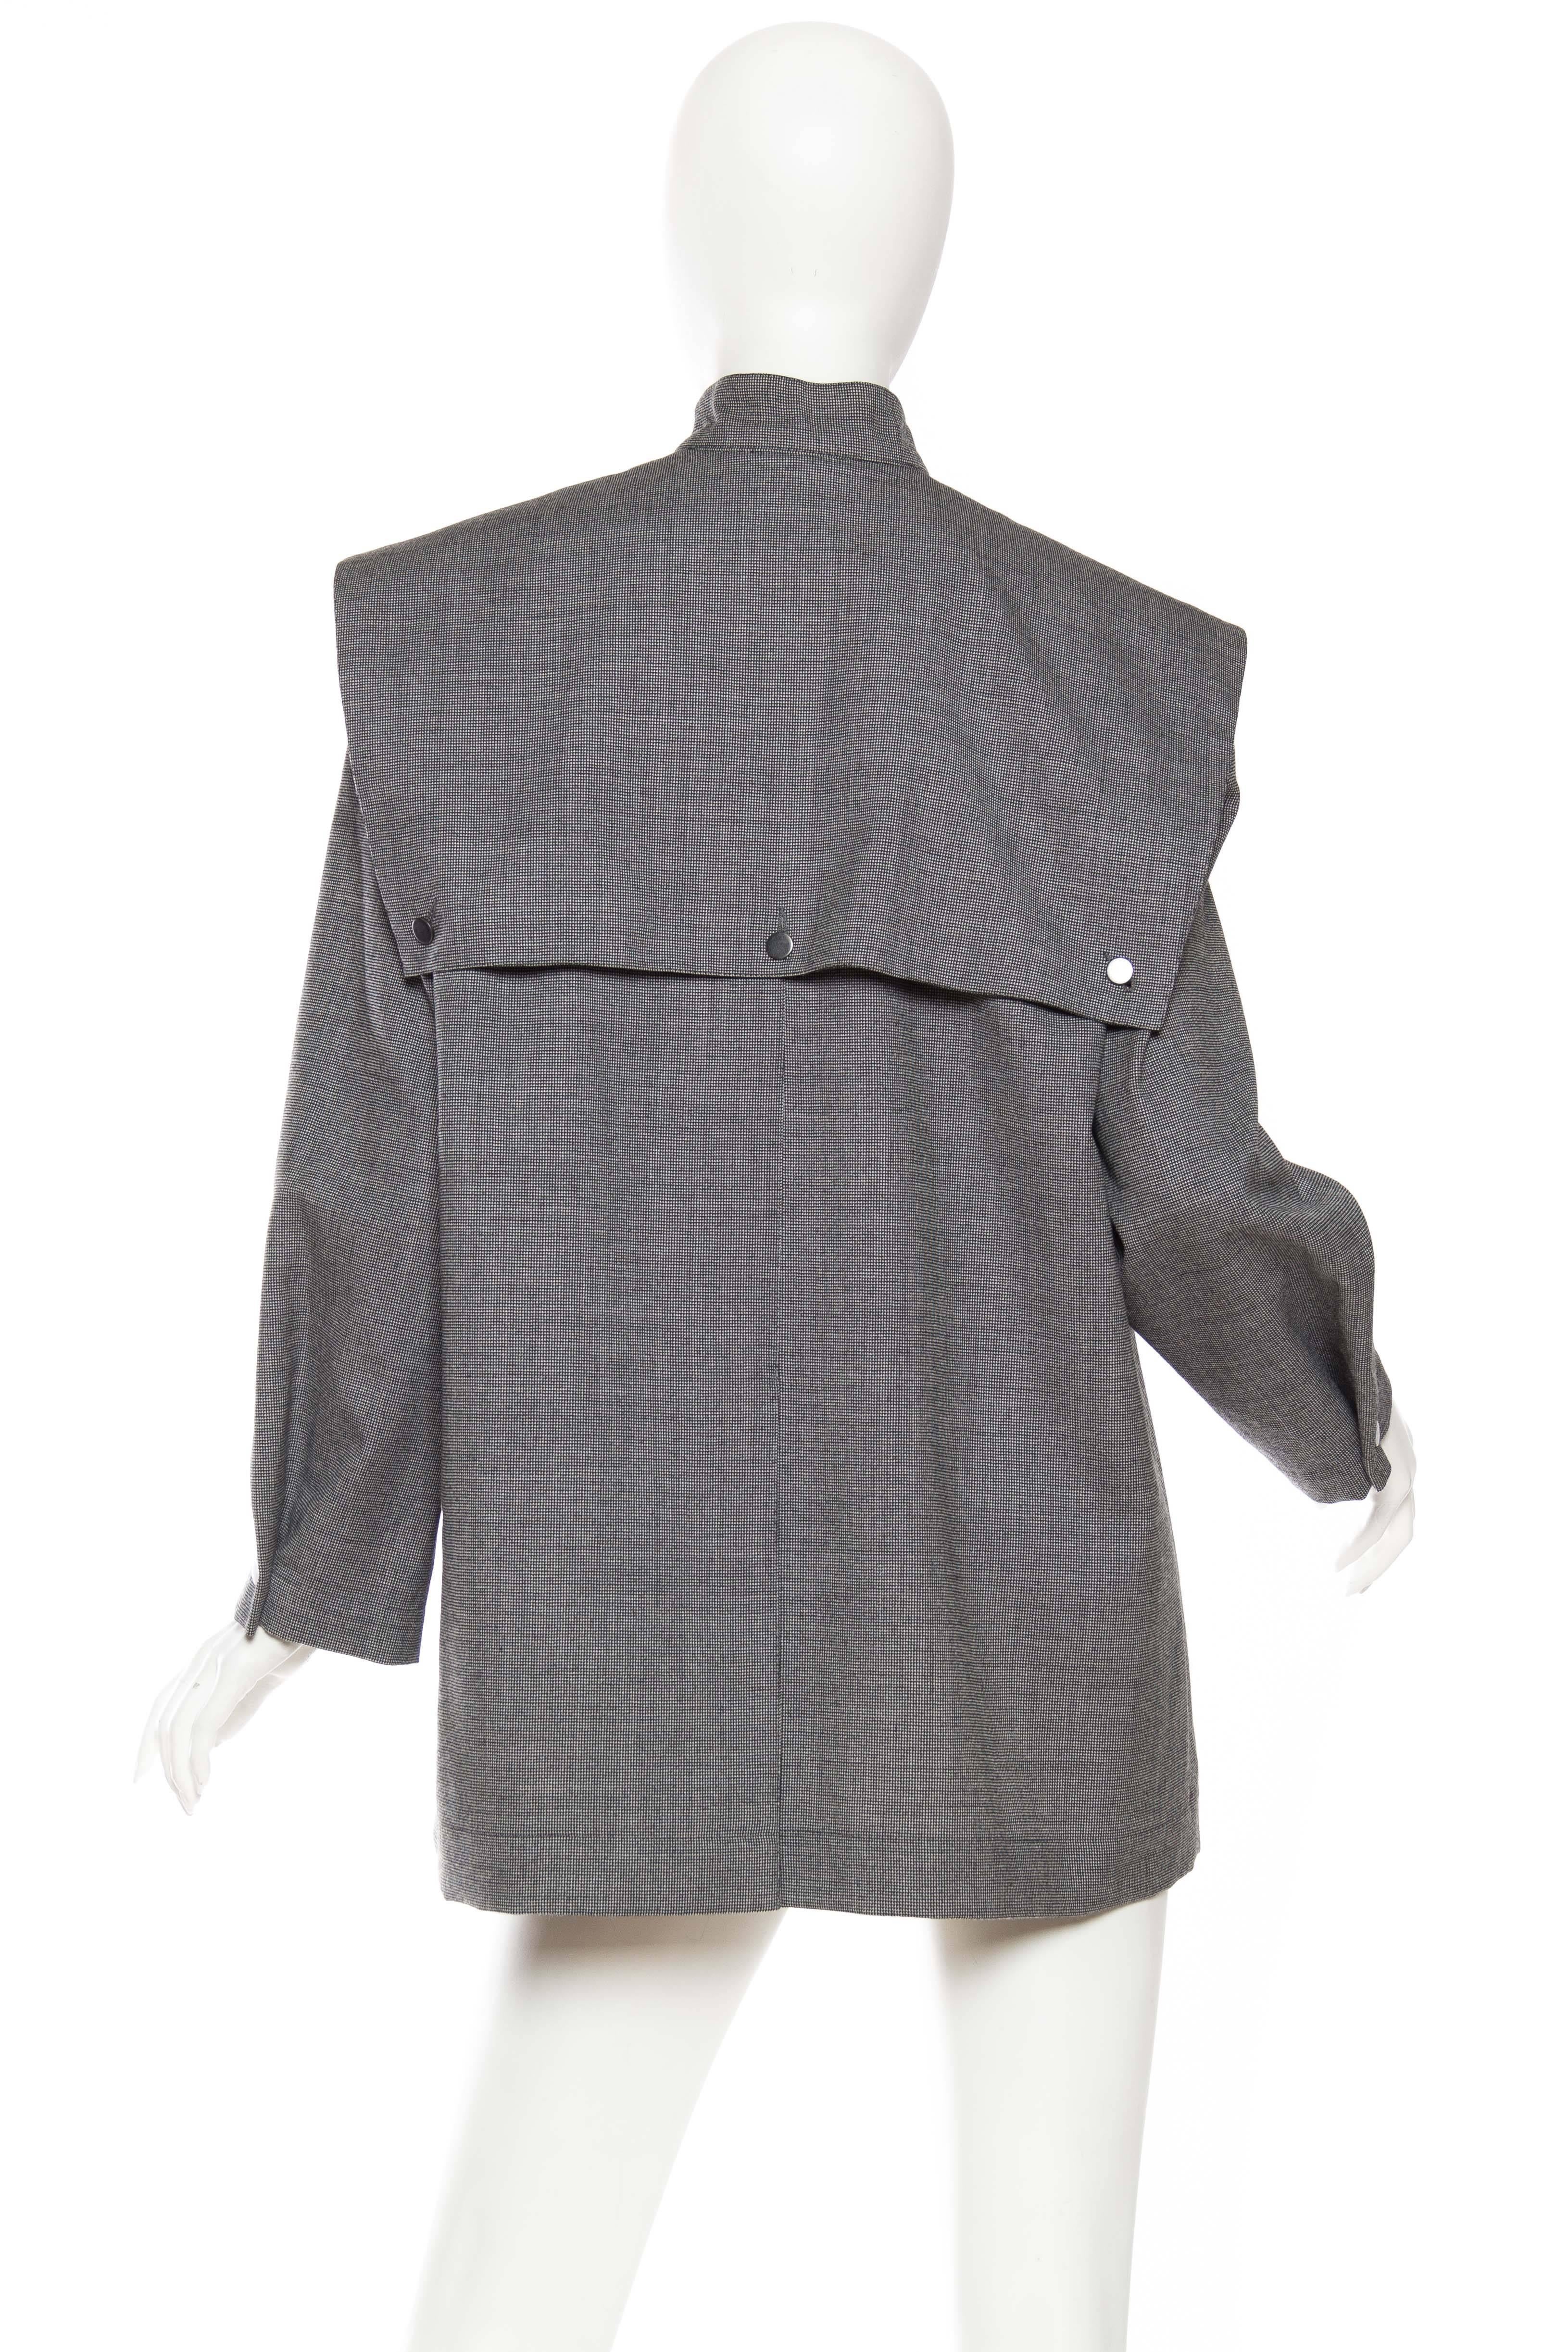 Christian Dior Sharp Modernist Jacket 3